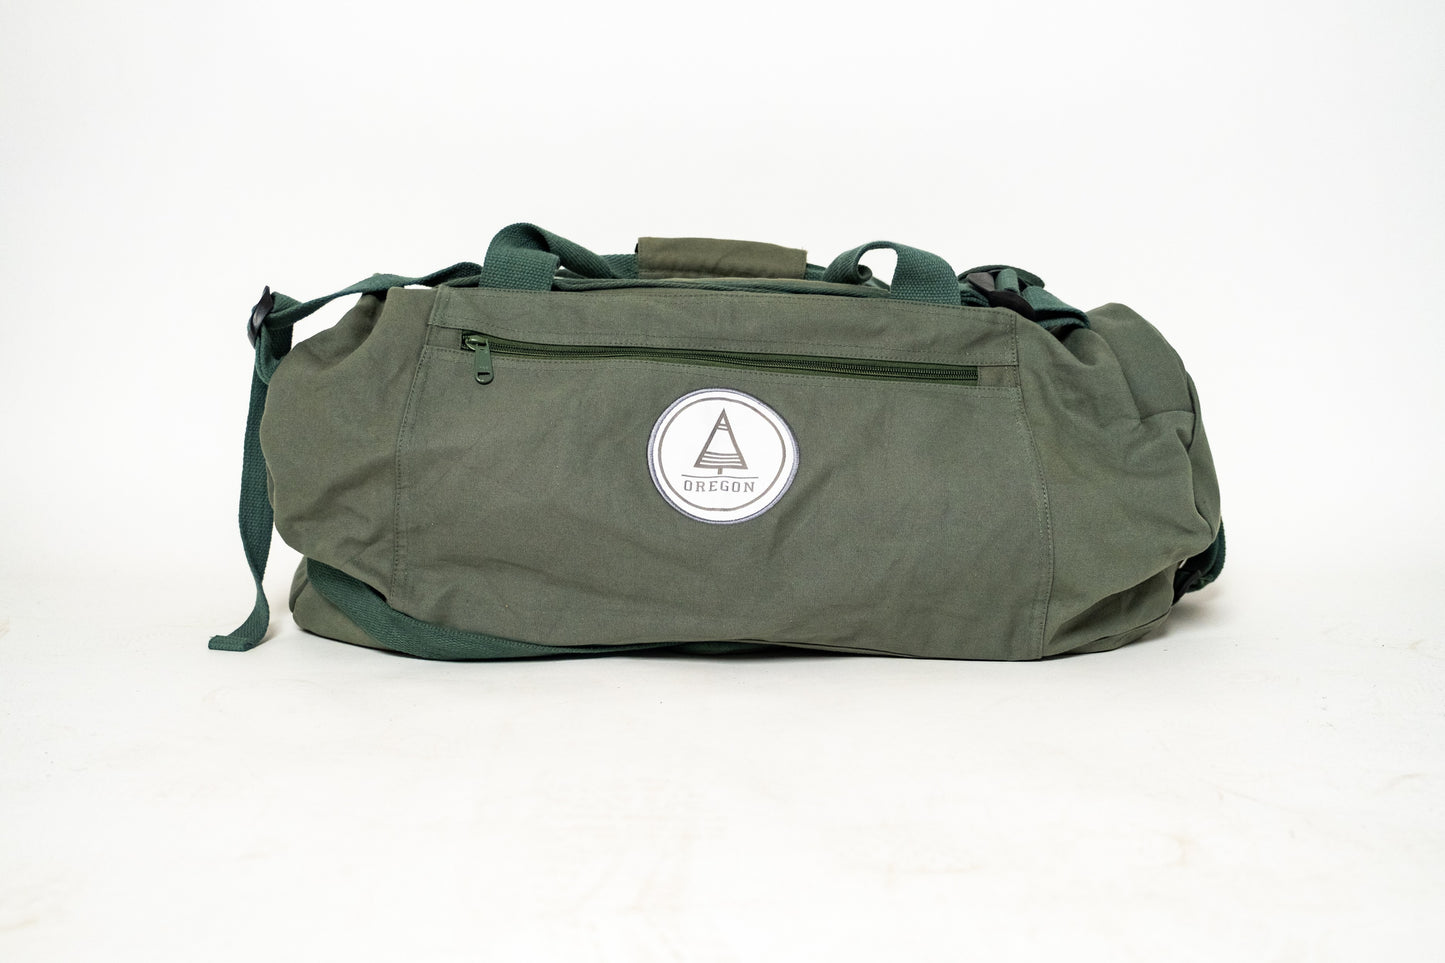 Authentic Green Duffel Bag